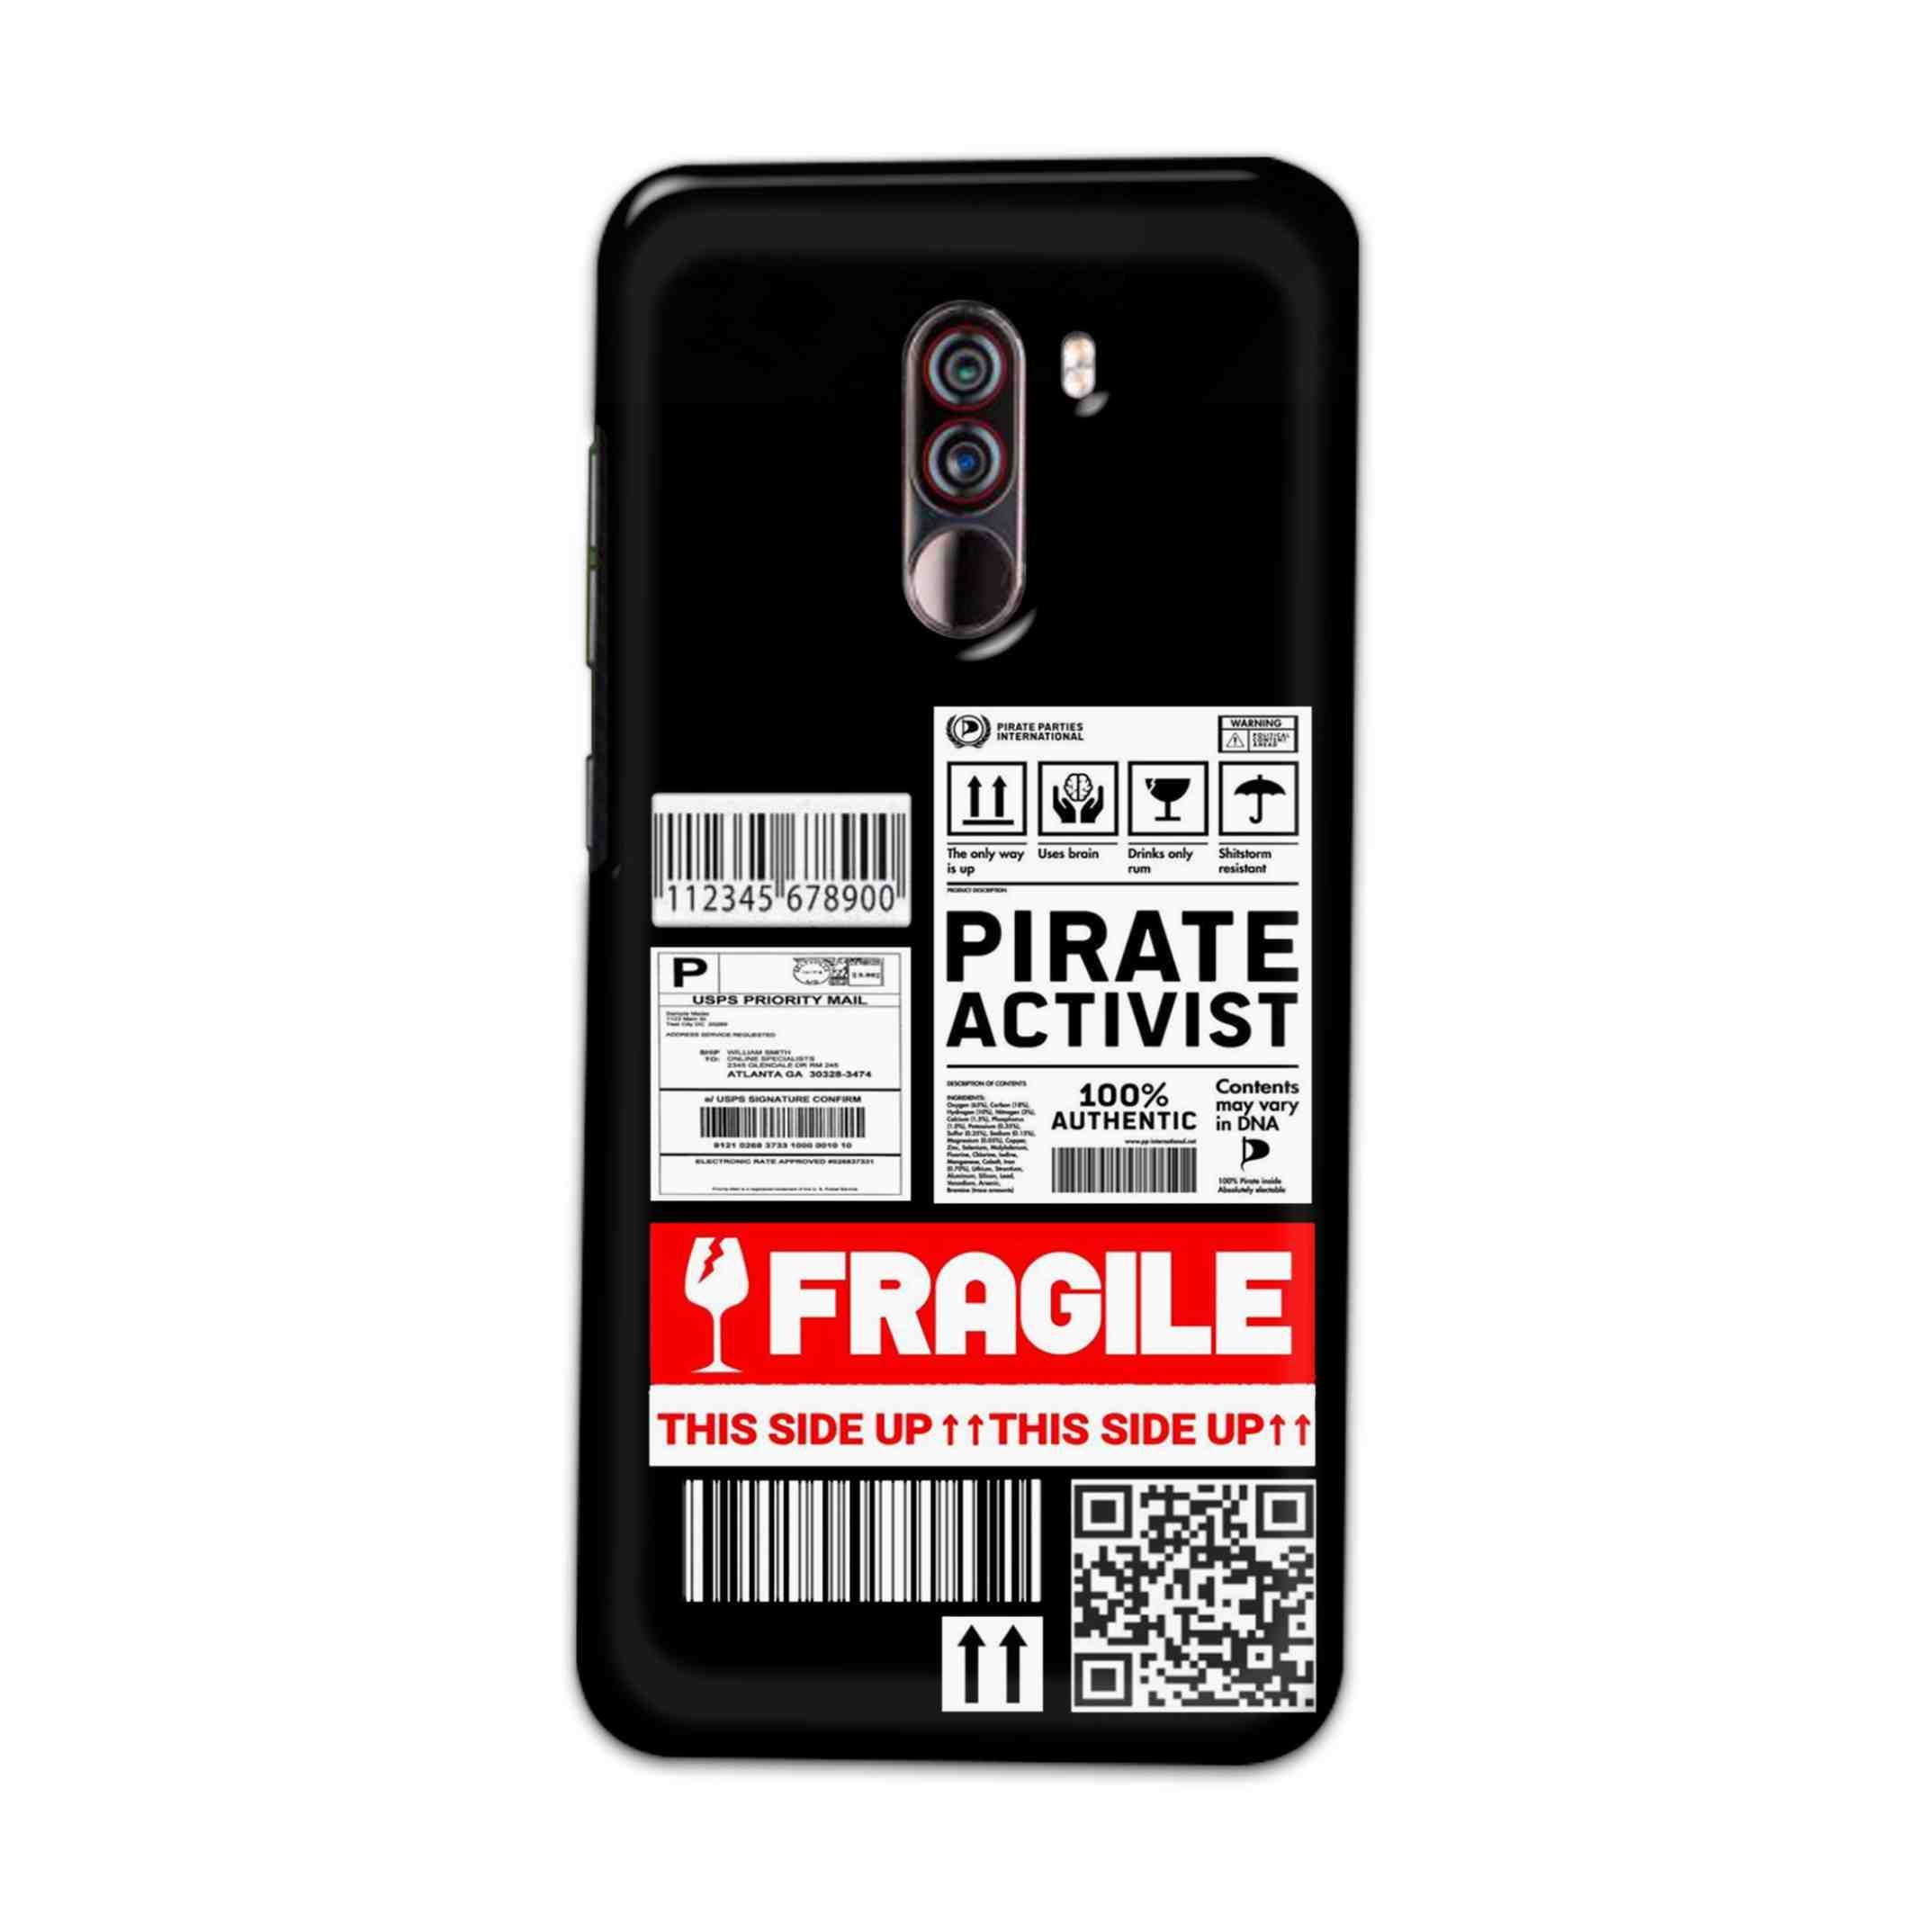 Buy Fragile Hard Back Mobile Phone Case Cover For Xiaomi Pocophone F1 Online